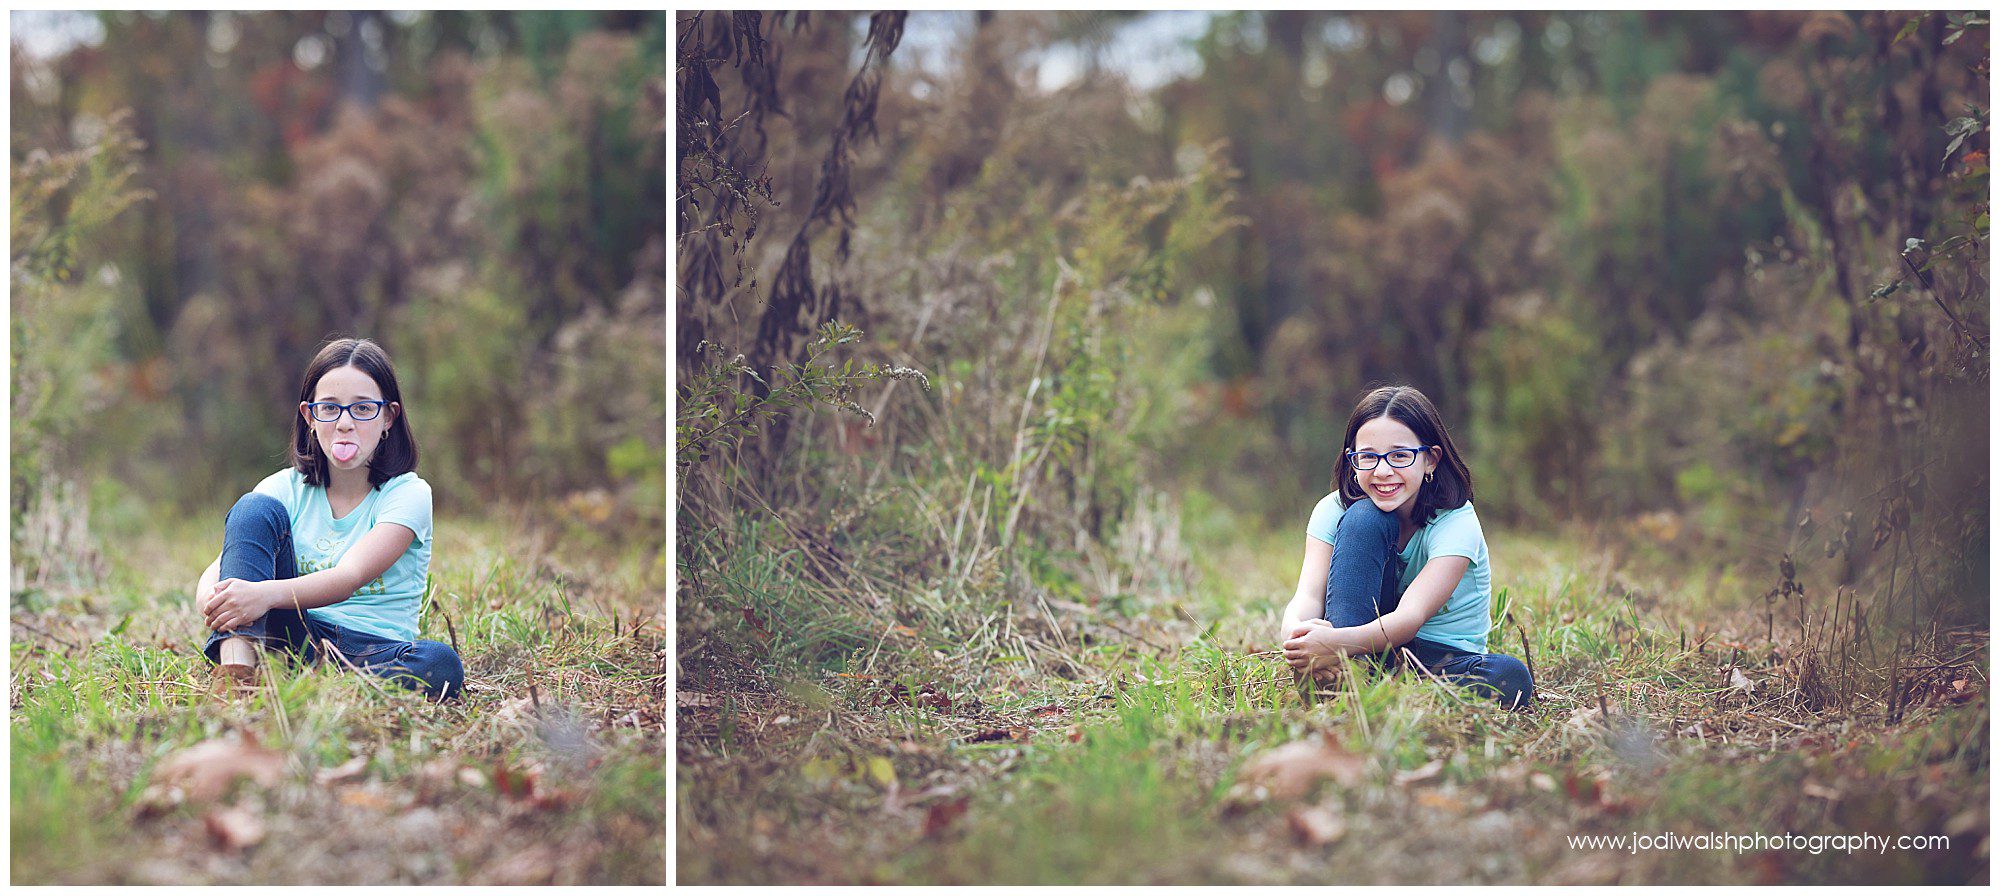 tween girl in Harry Potter t-shirt sitting in field